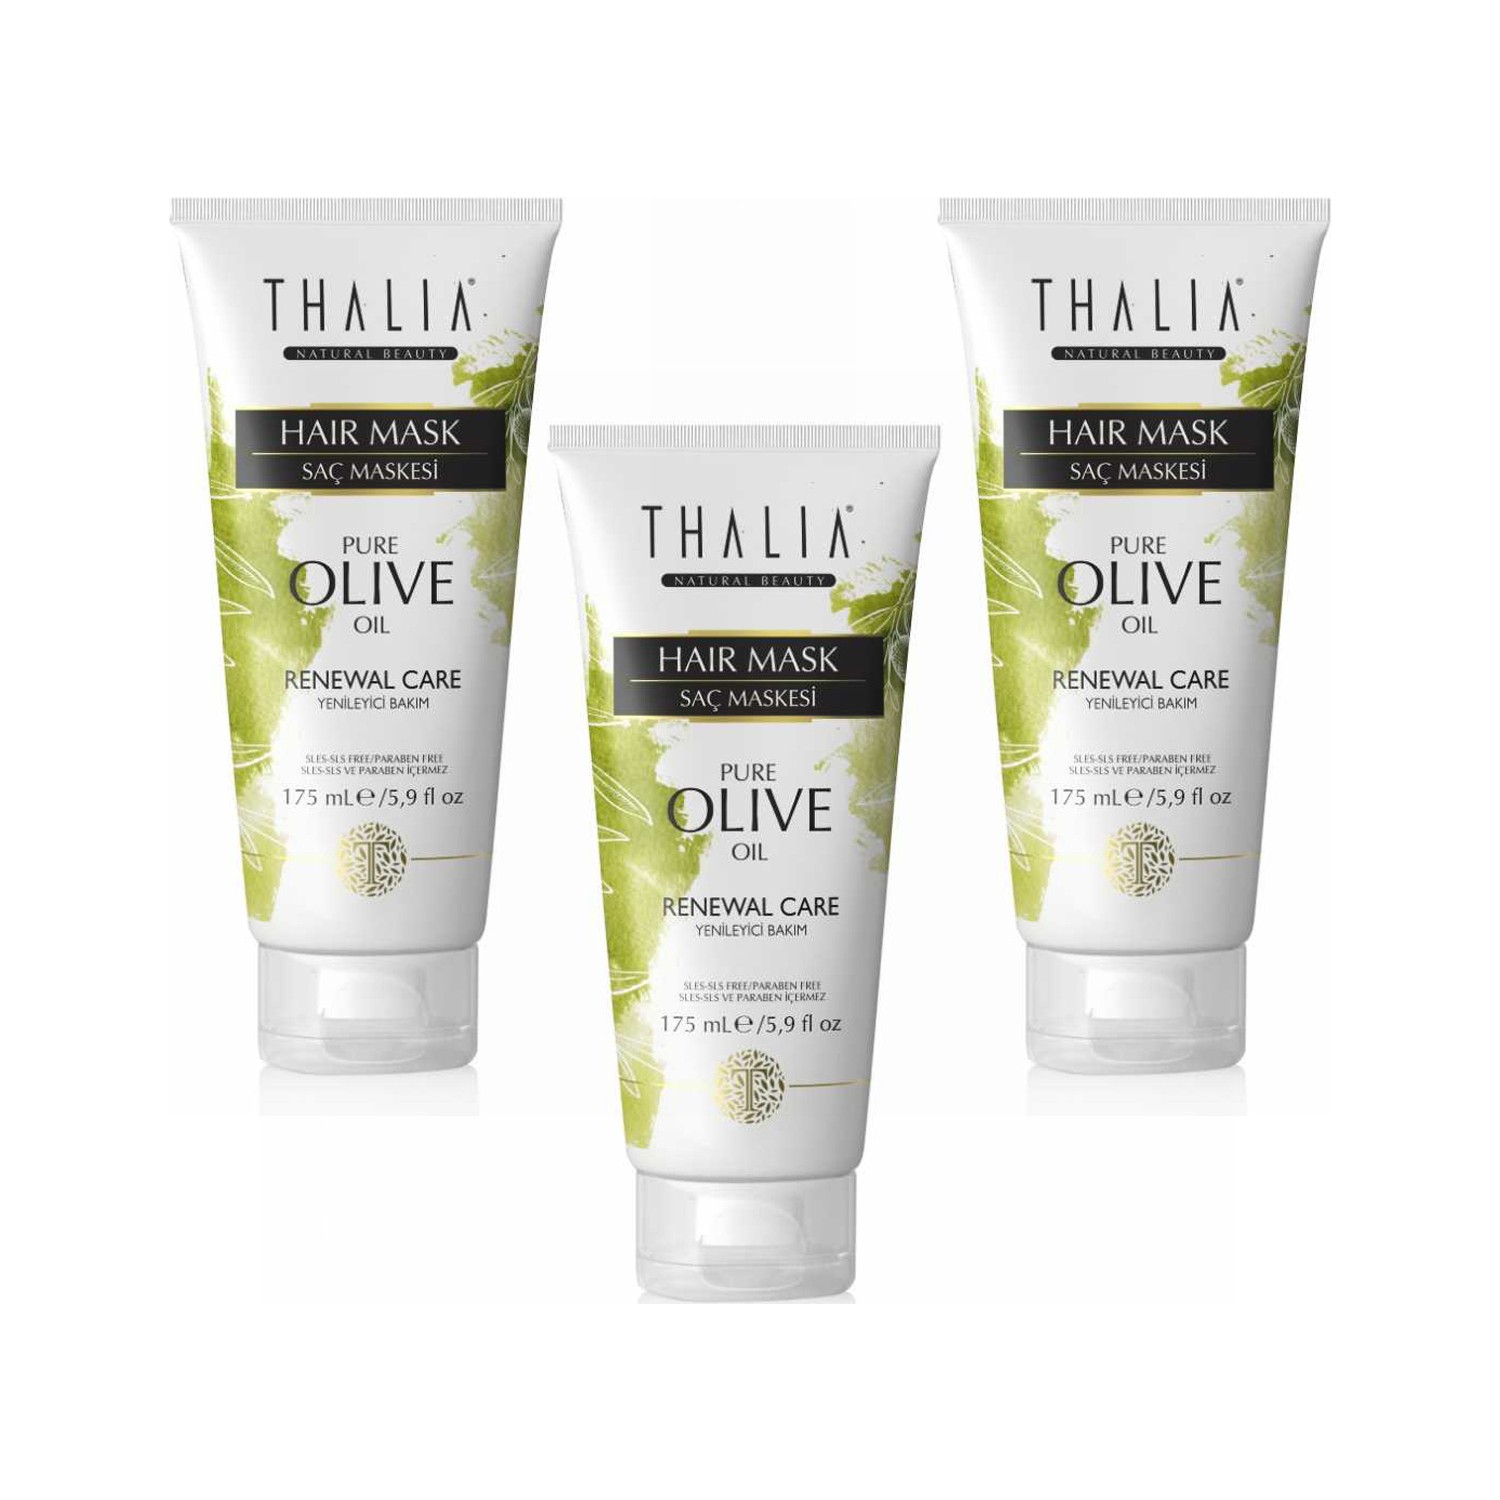 Маска Thalia Organic Olive Oil для ухода за волосами, 3 x 175 мл увлажняющая маска для ухода за волосами thalia с оливковым маслом 175 мл